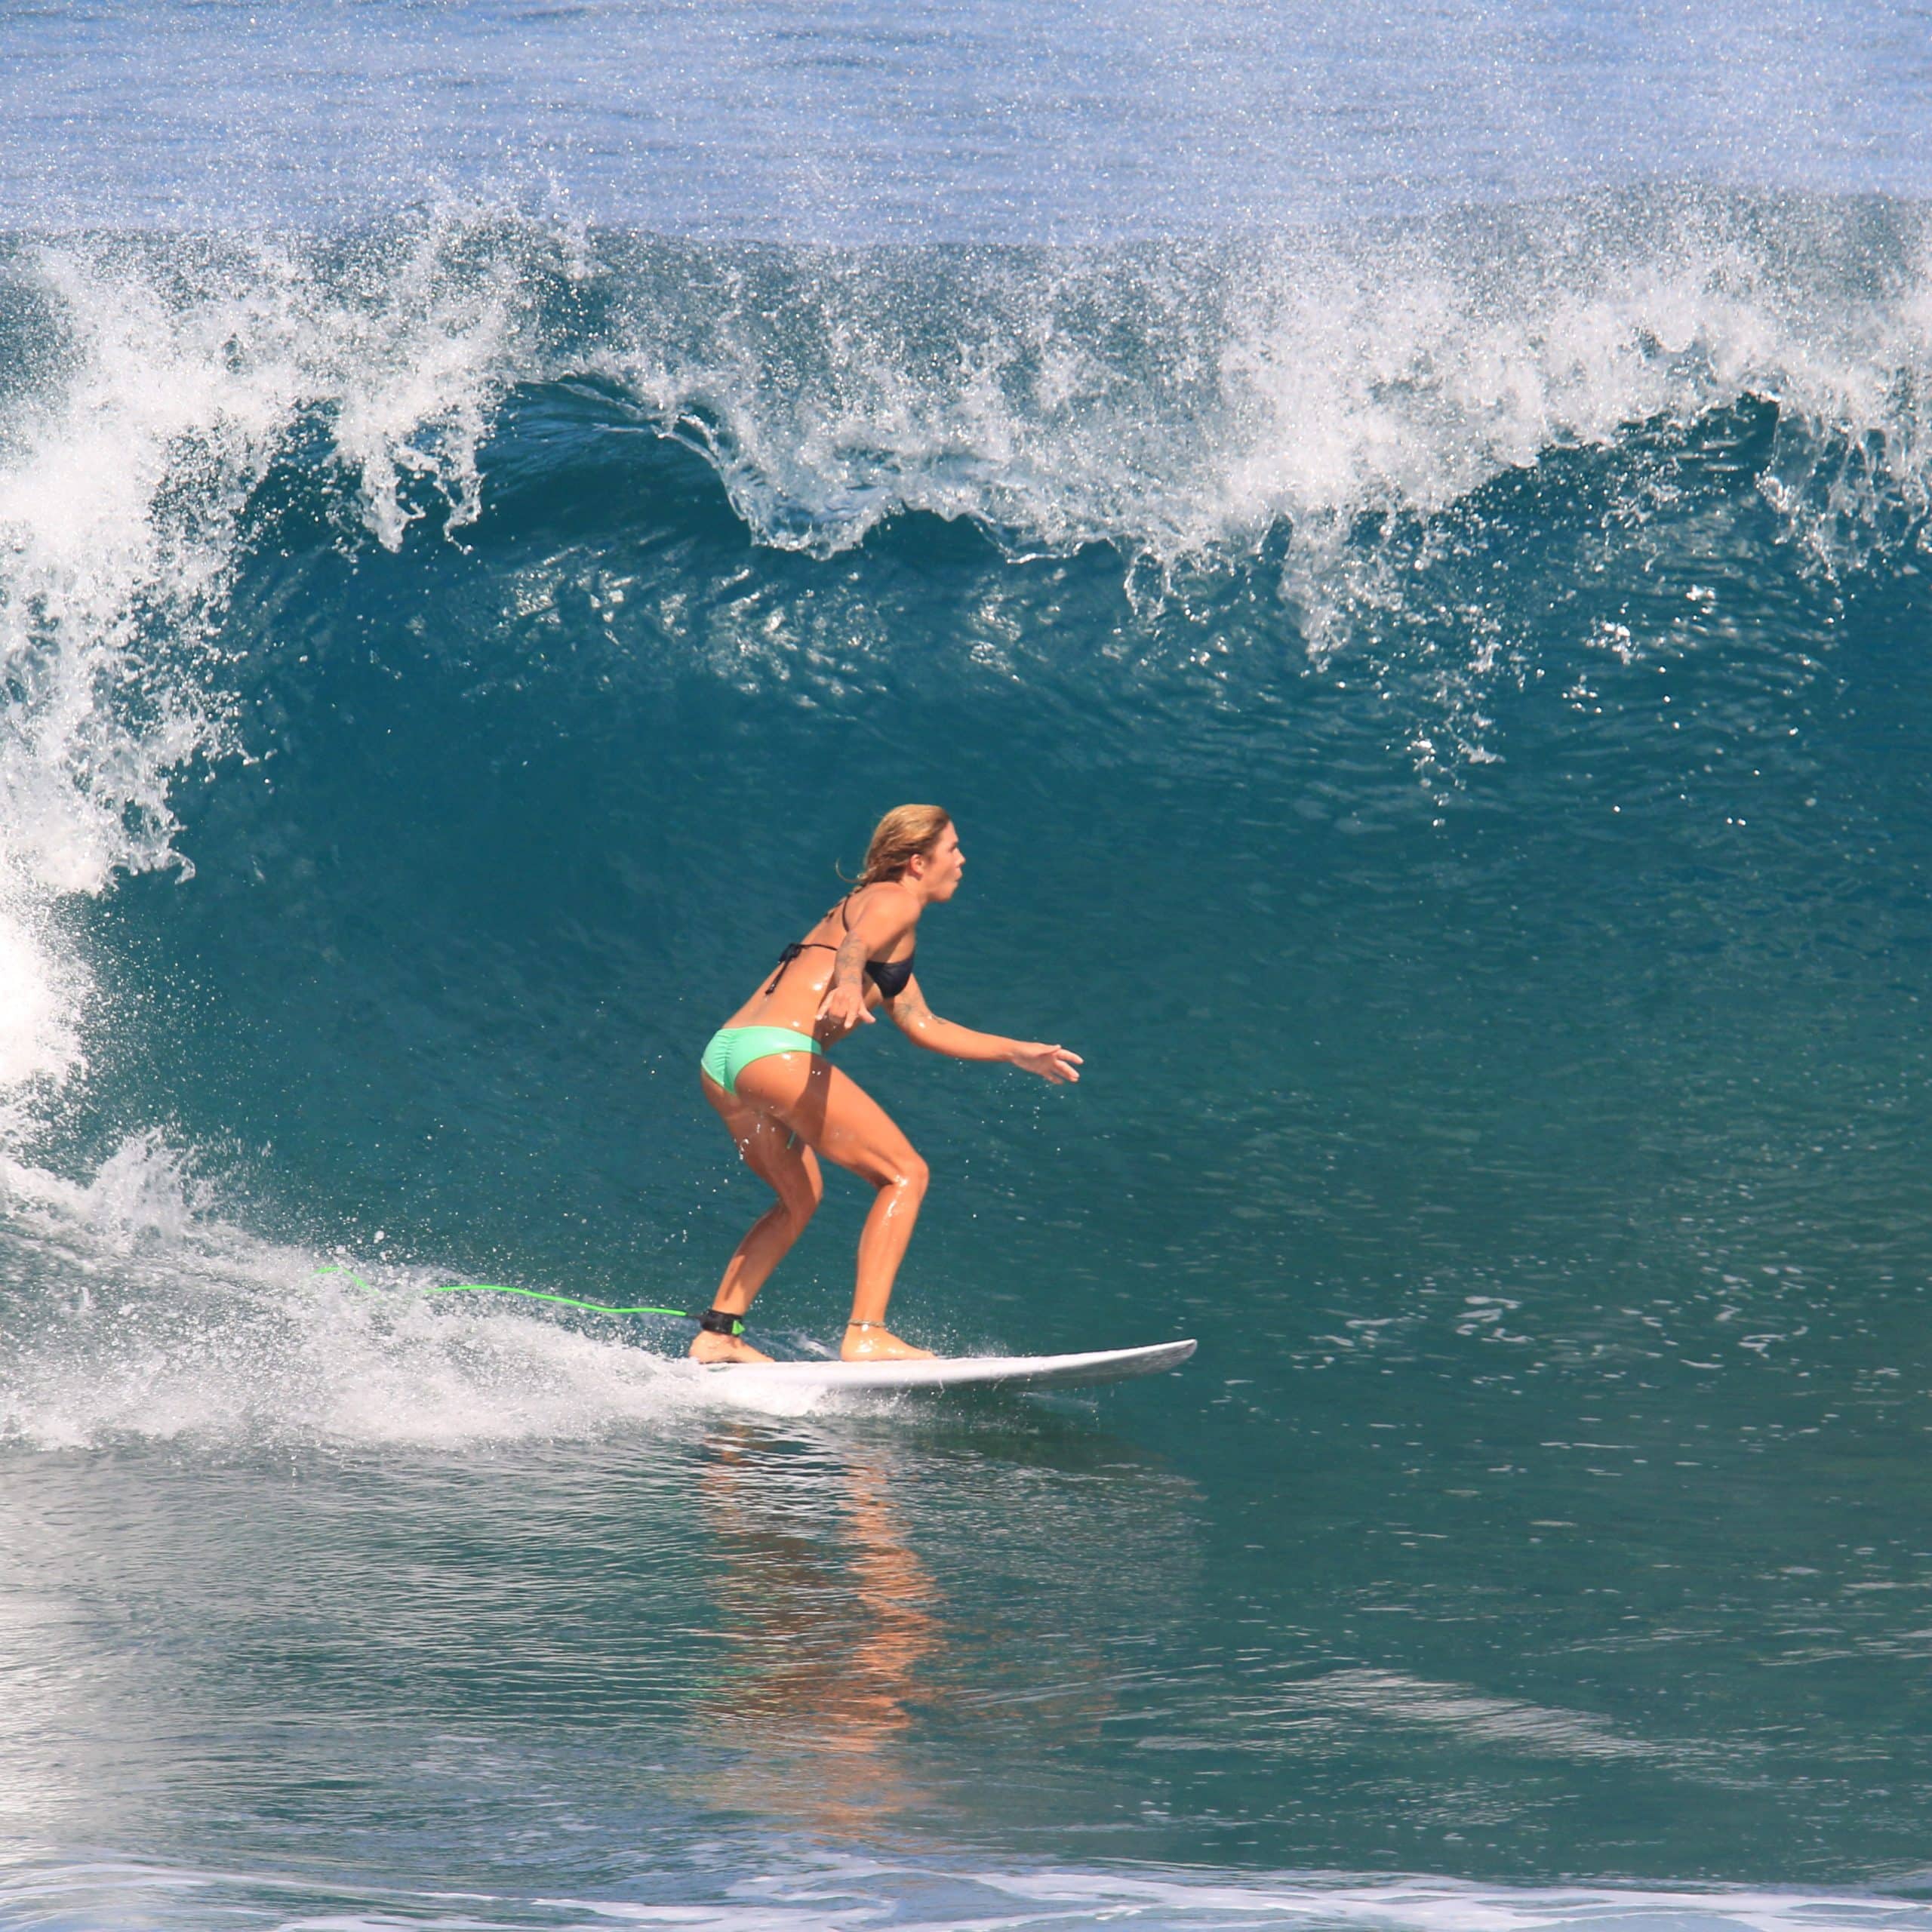 Whitney surfing